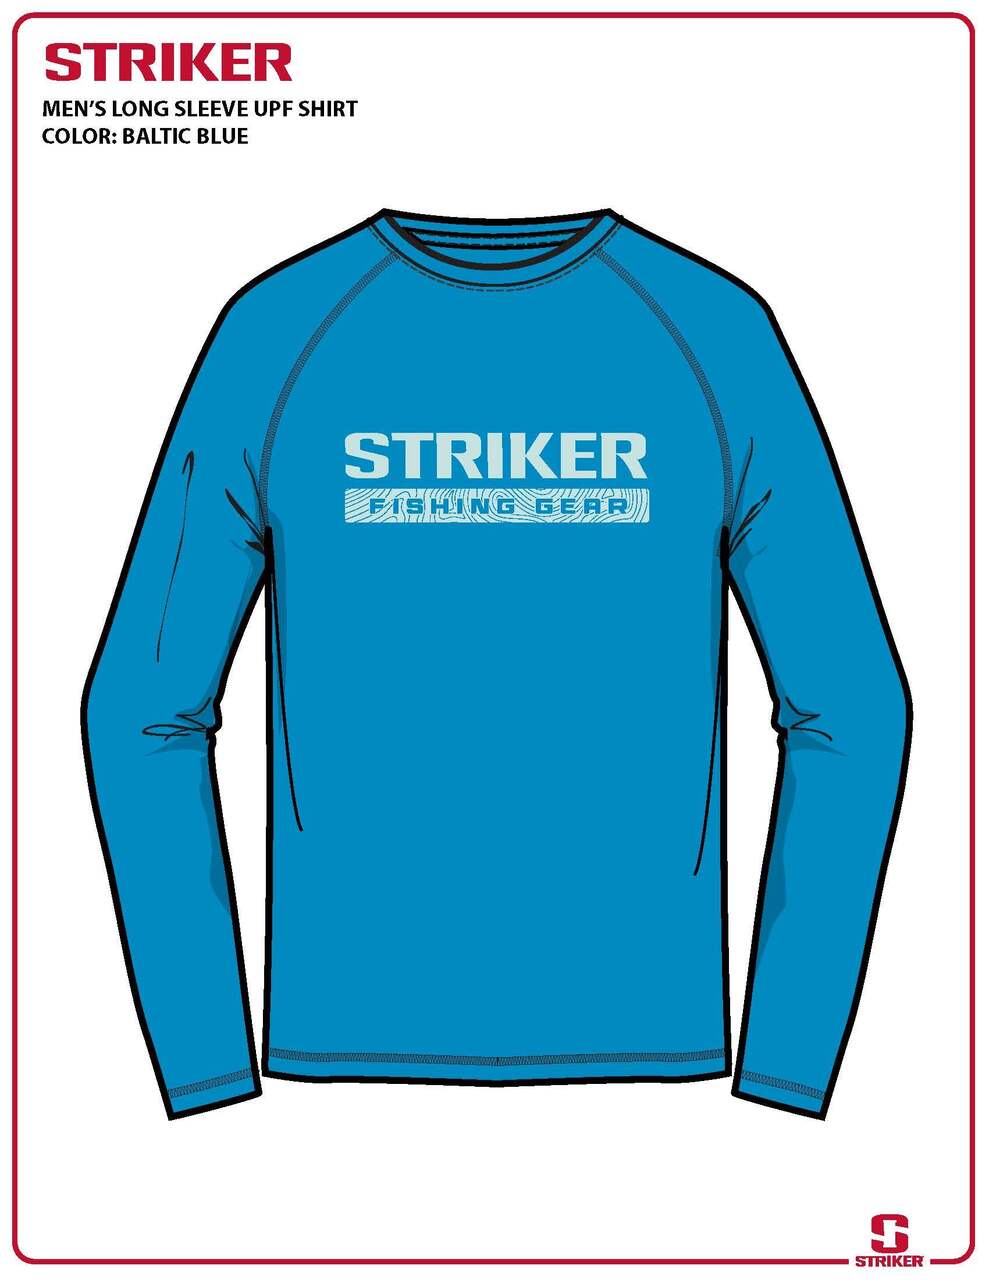 Striker UPF 50 Fishing Shirt